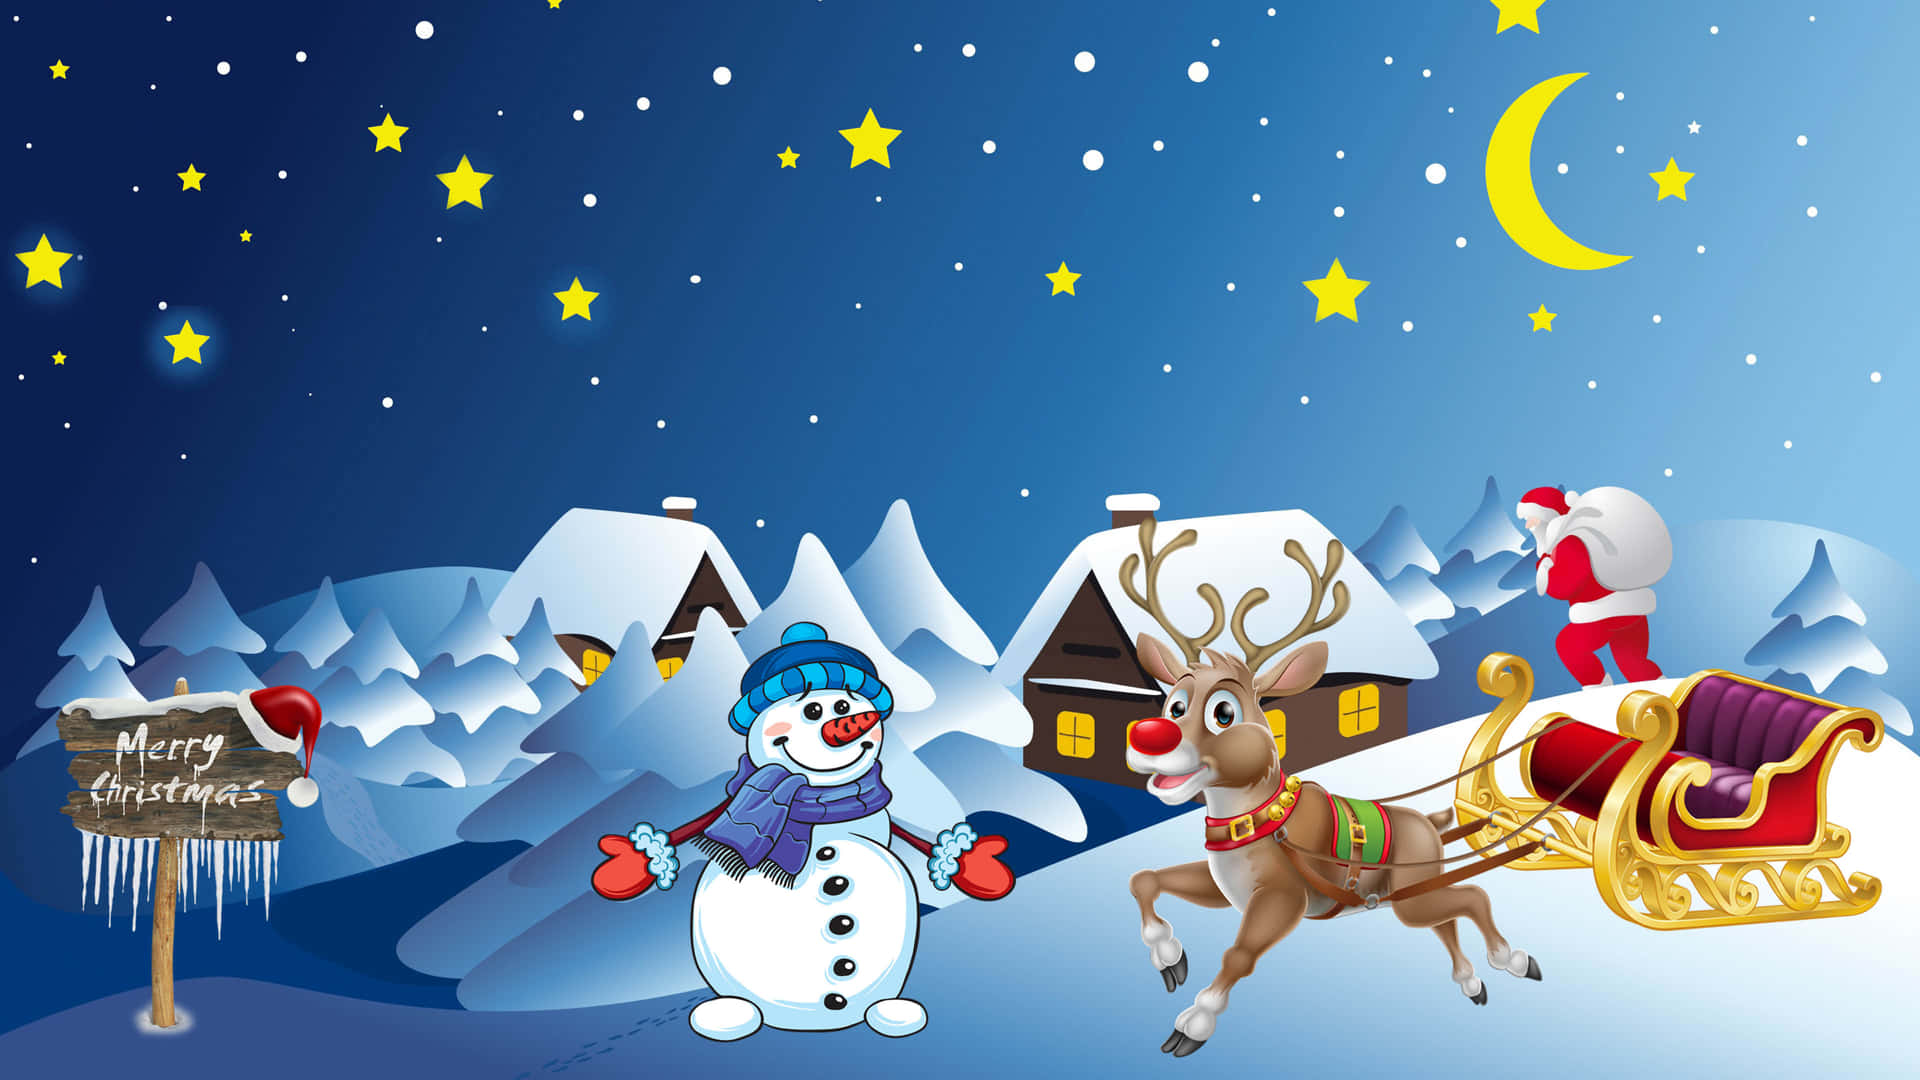 Snowman And Rudolph Snow Christmas Digital Art Background